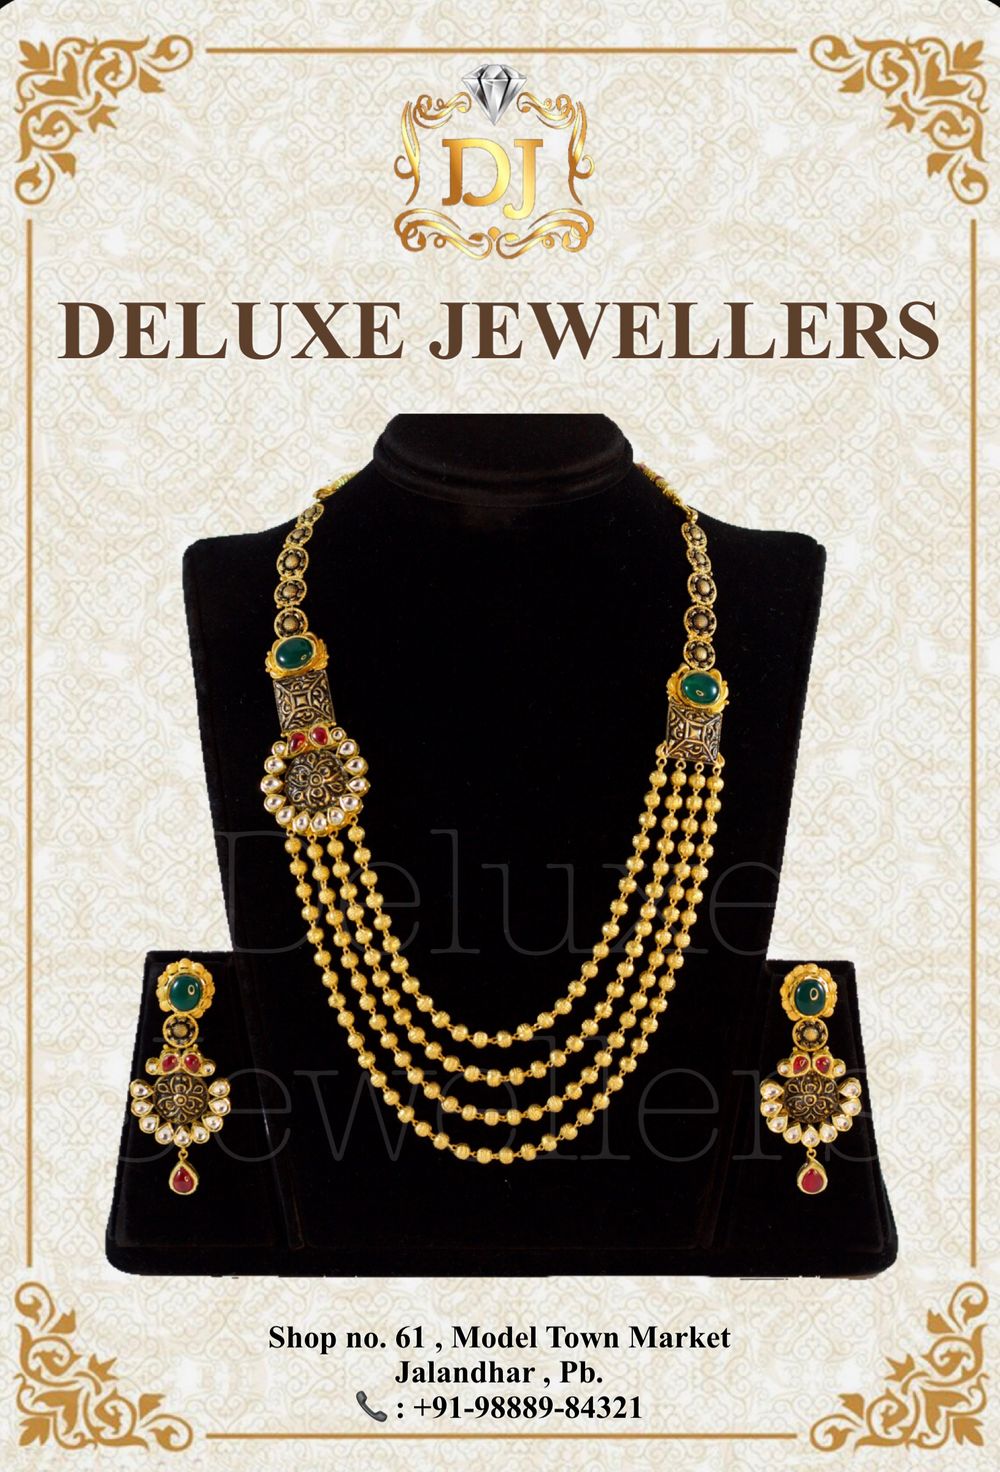 Photo By Deluxe Jewellers - Jewellery